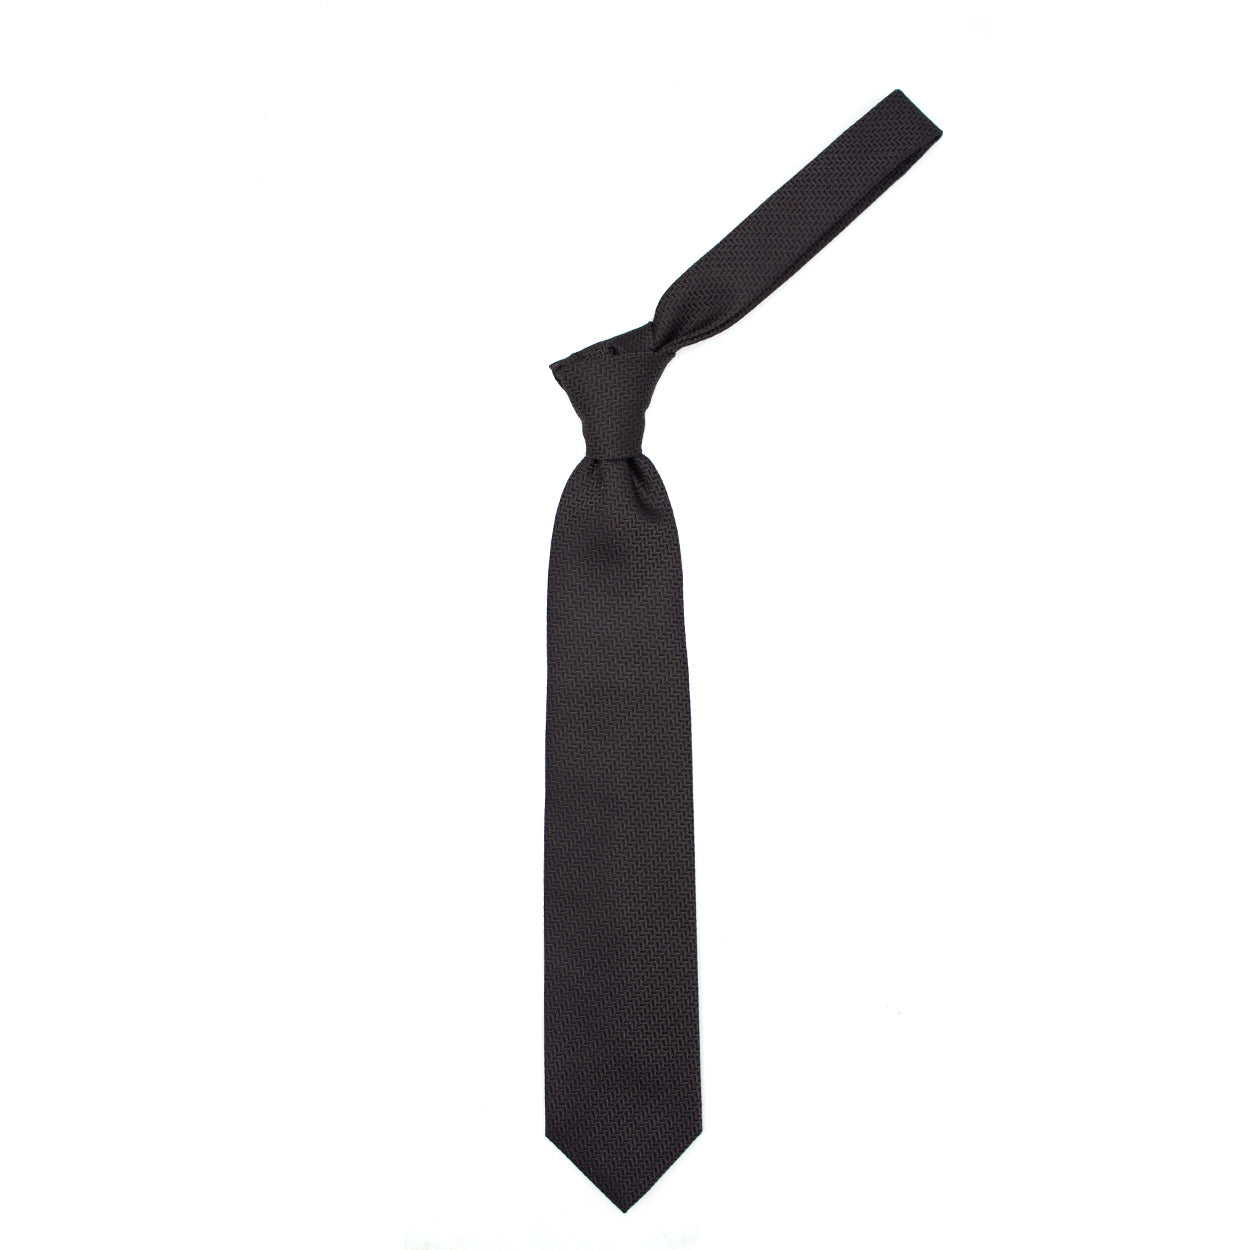 Brown tone-on-tone textured tie